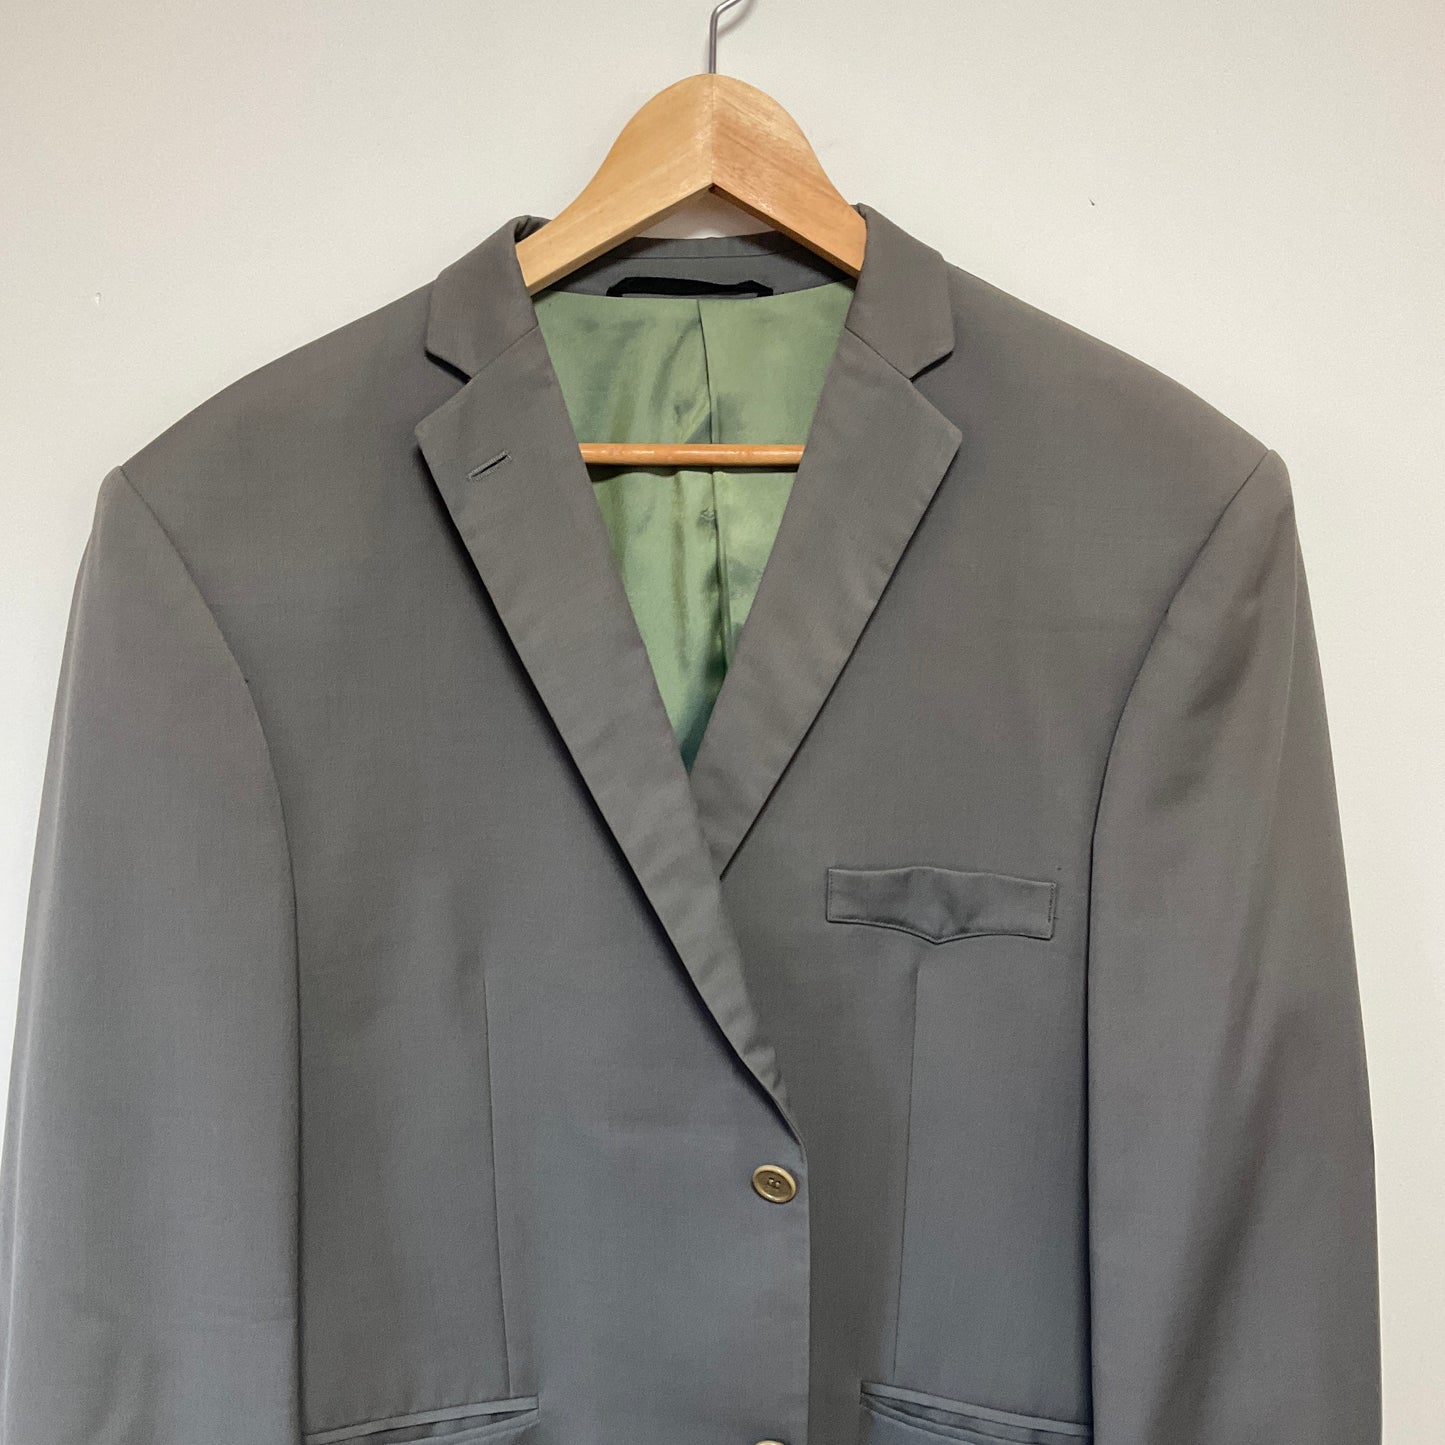 Zambesi - Air NZ Uniform Jacket